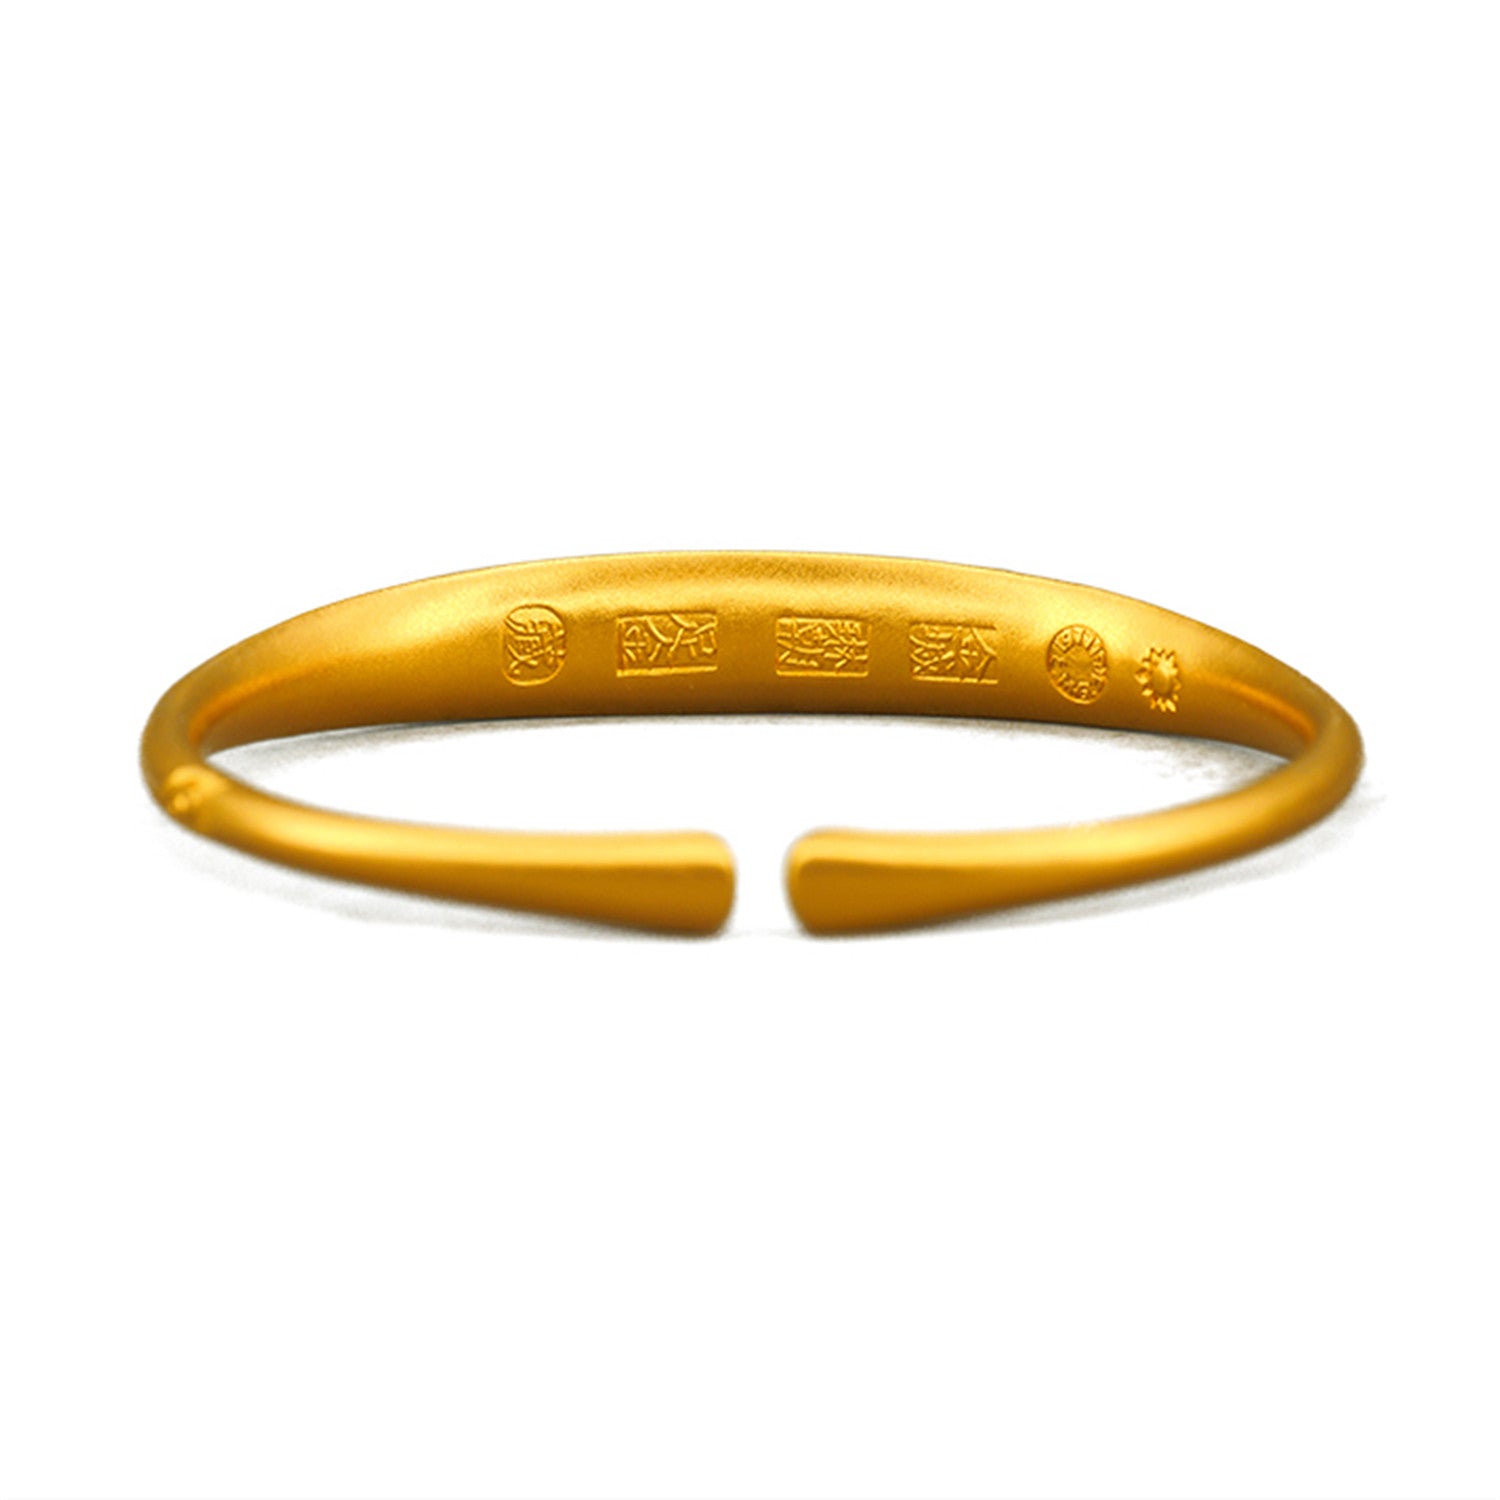 EVECOCO Full Gold Bracelet Hand Forging,Peach Blossom Pattern For Couples,45g